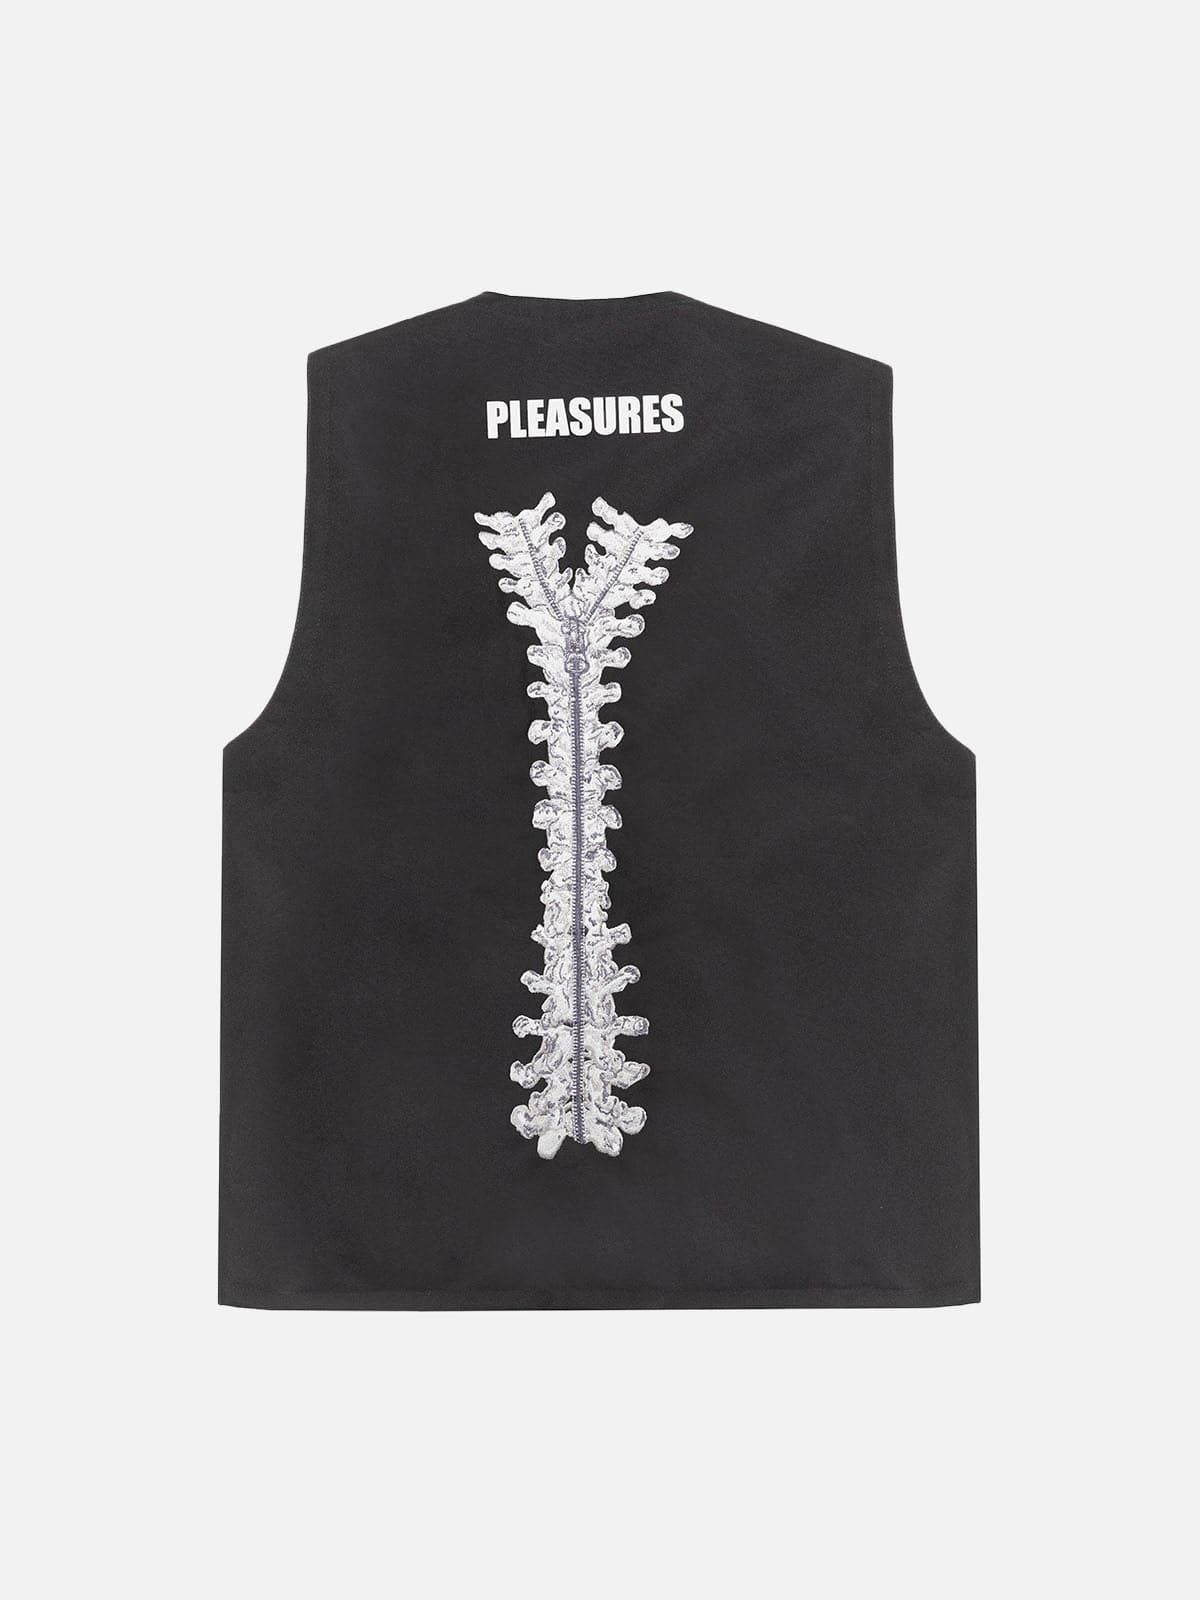 Eastpak x Pleasures Vest XL - Spine | YELEK shopi go